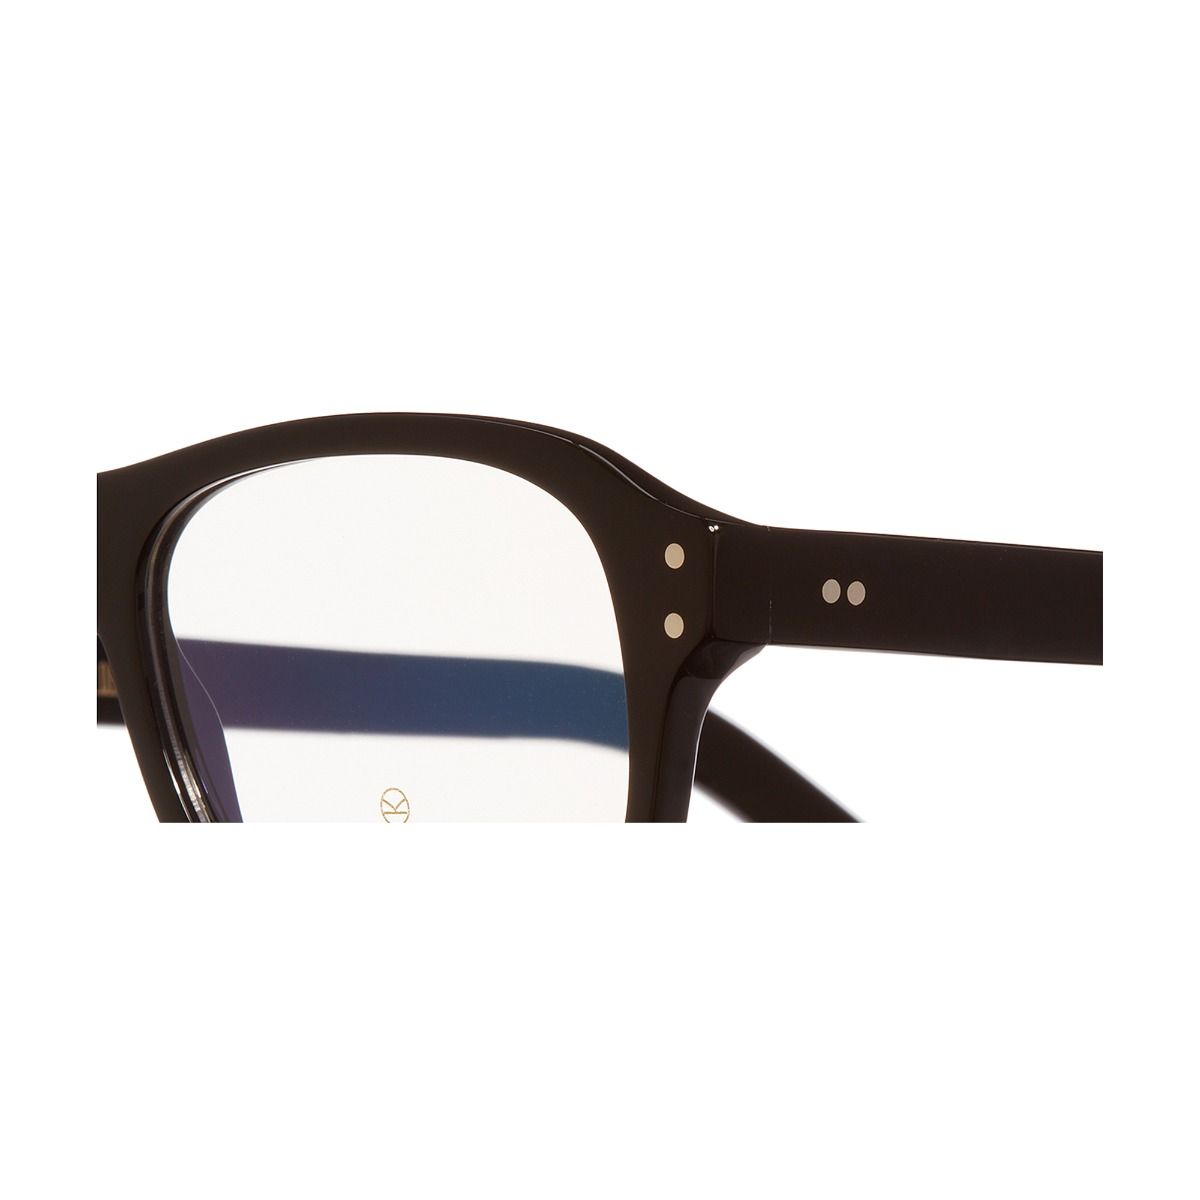 0847 Kingsman Optical Aviator Glasses-Black